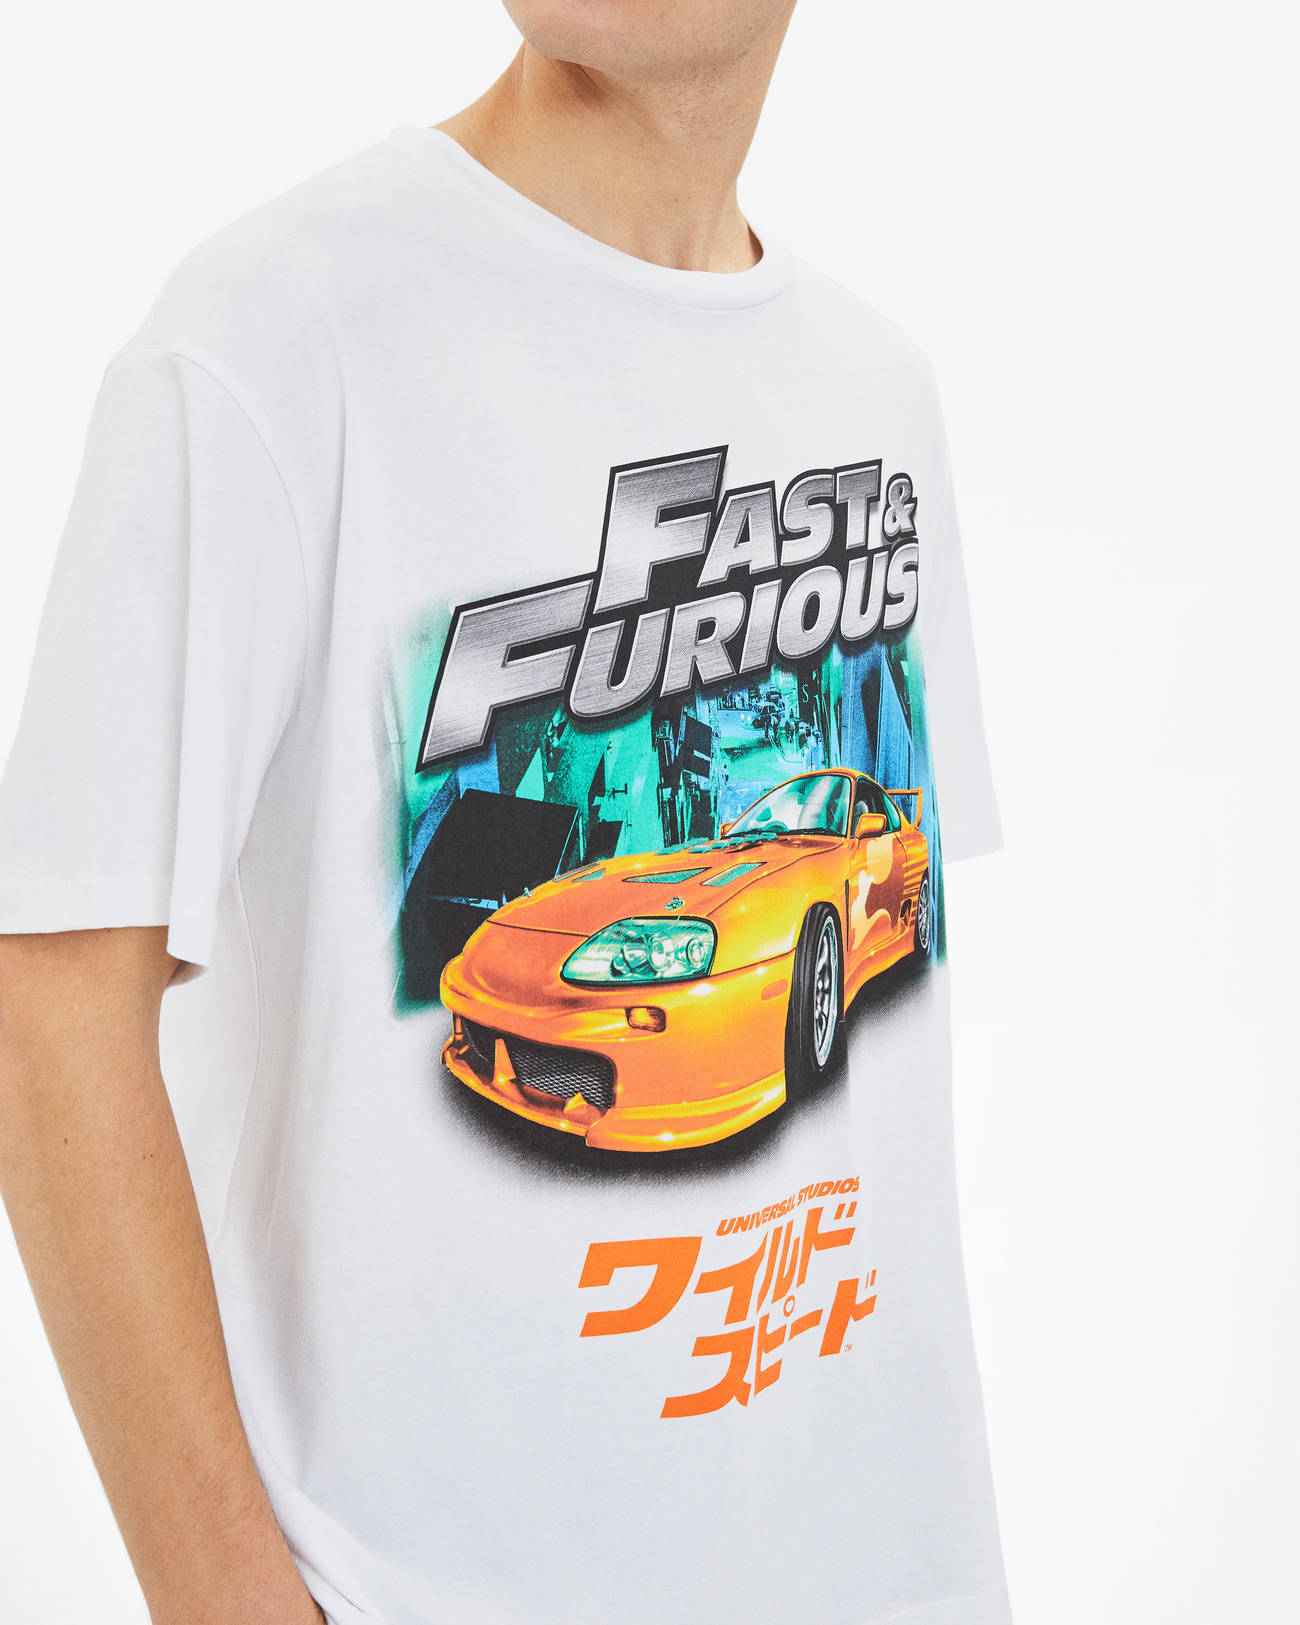 Please fast. Футболка fast Furious. Футболка Форсаж бершка. Футболки Форсаж fast Furious. Футболка Форсаж 2.